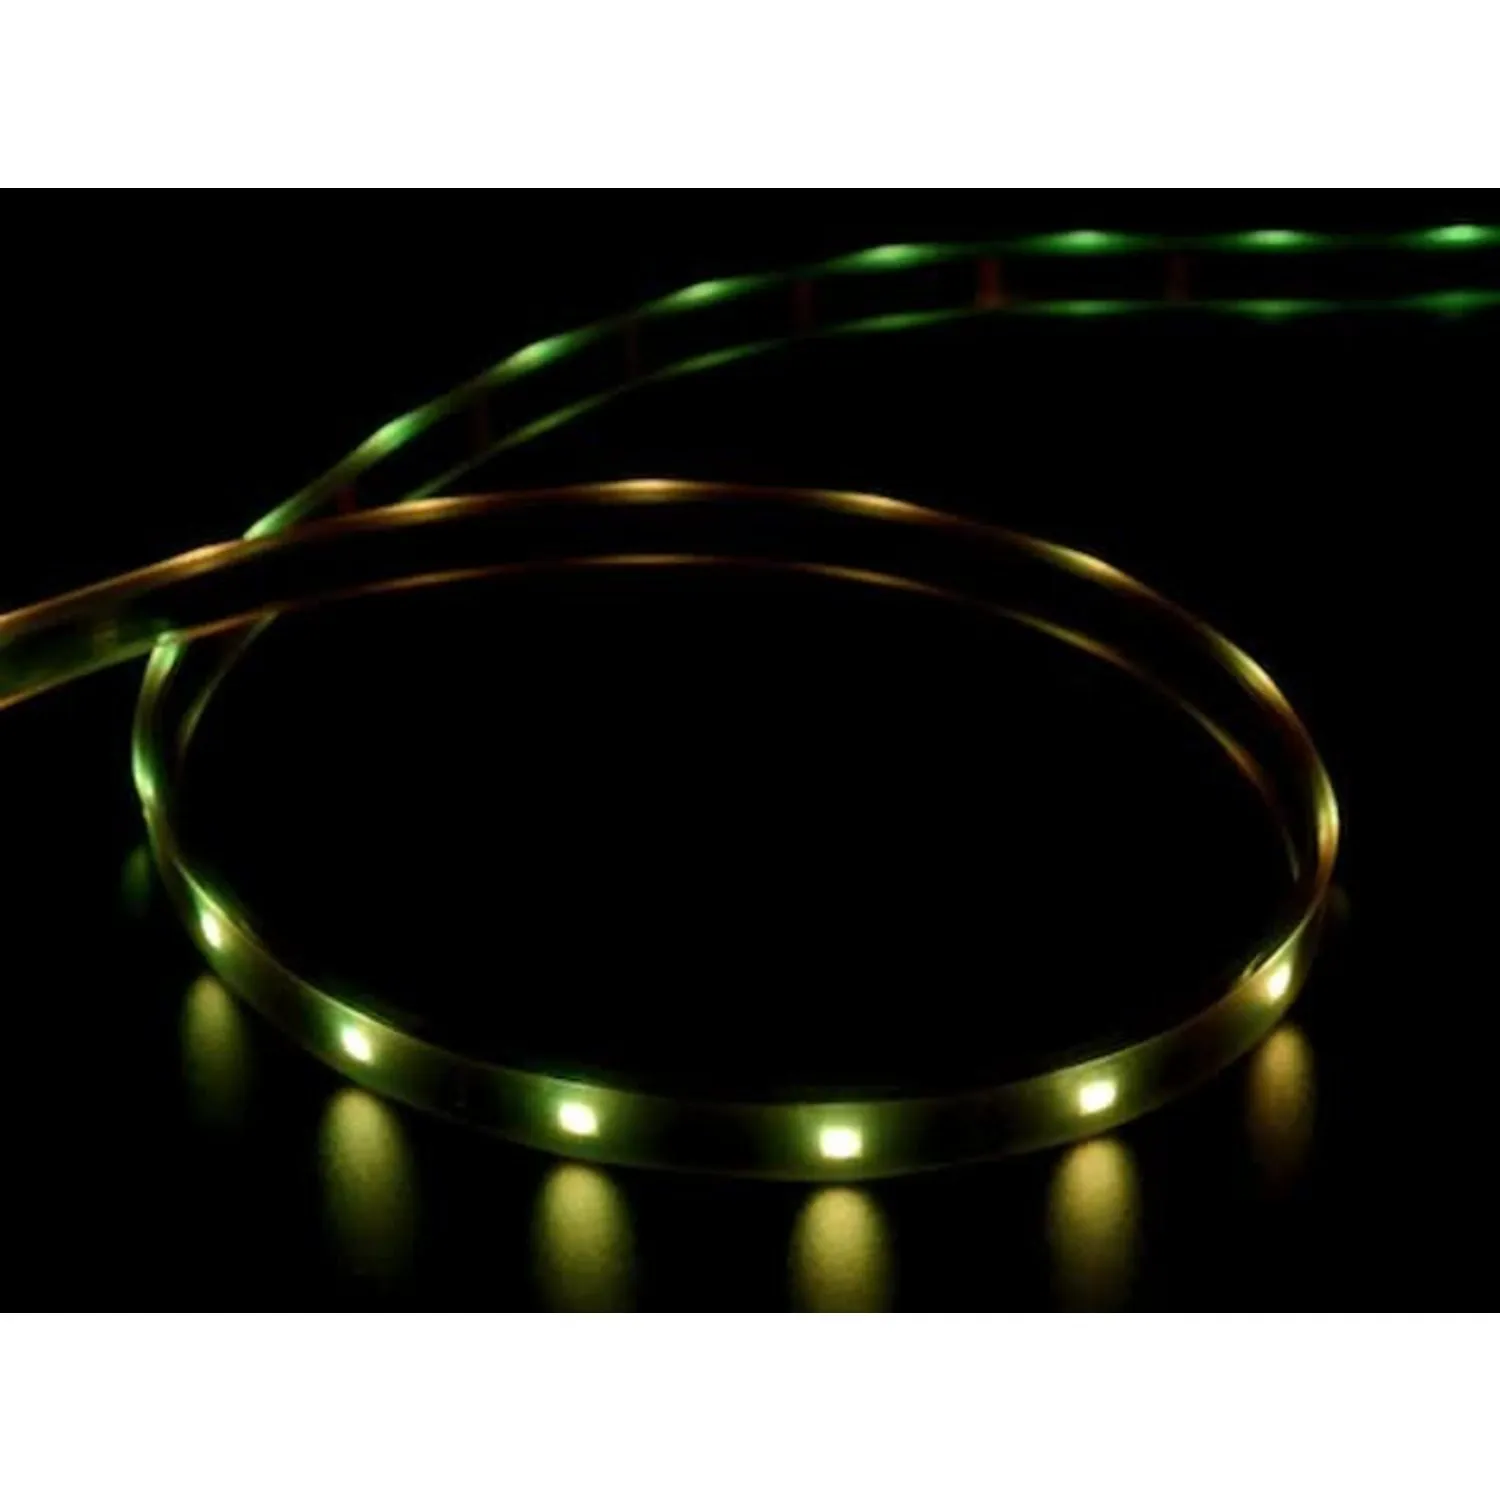 Photo of Adafruit DotStar LED Strip - APA102 Cool White - 144 LED/m [~6000K - One Meter]